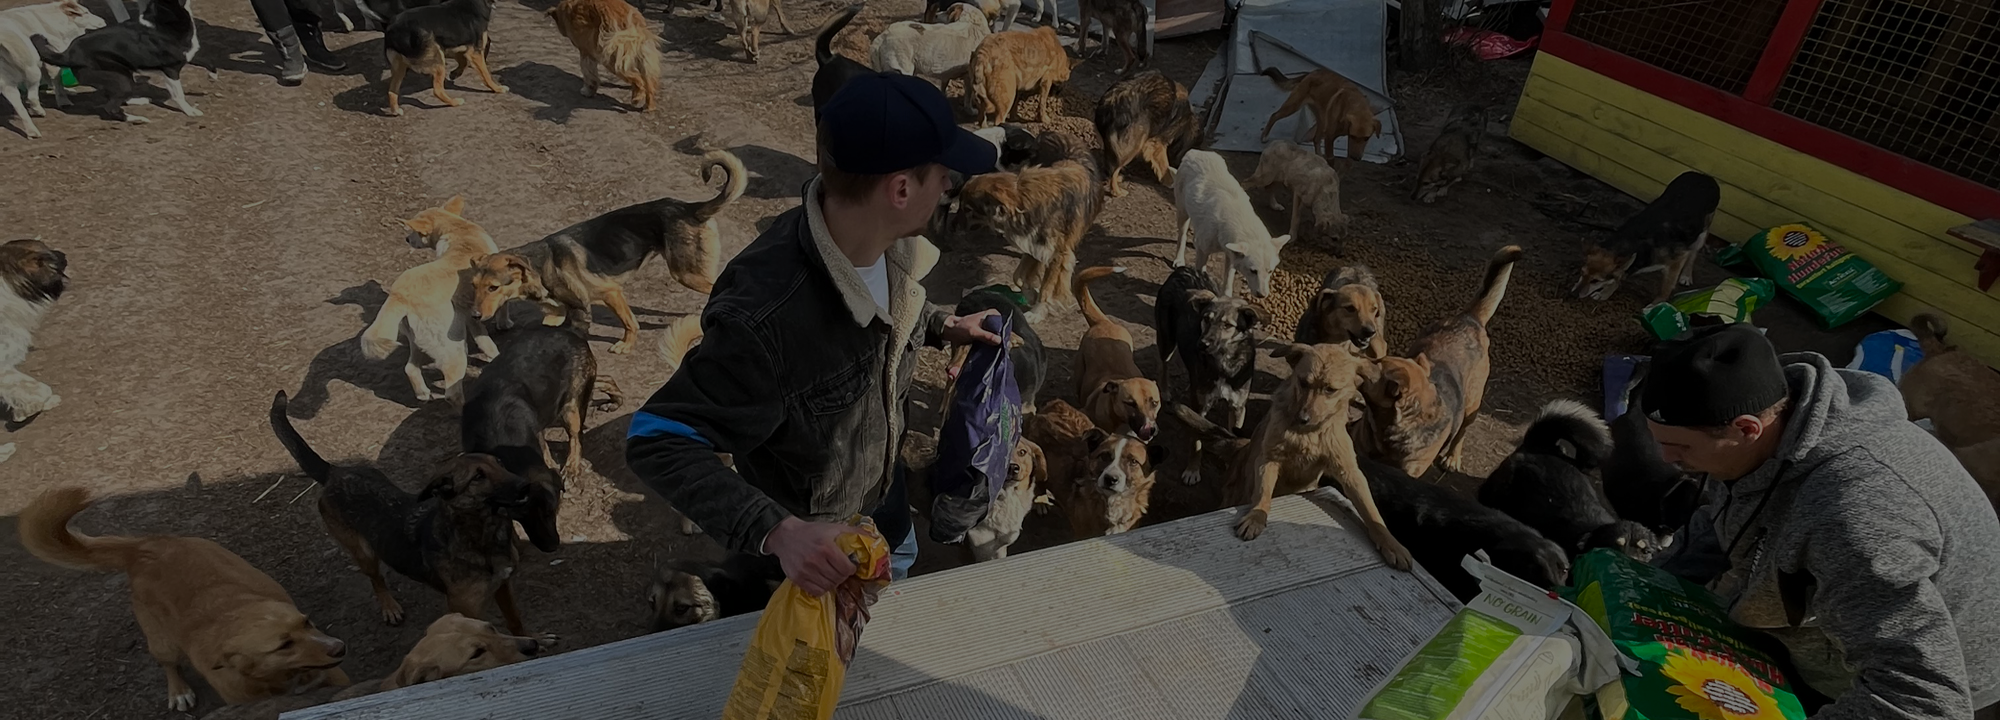 k9 feeding dogs in Ukraine